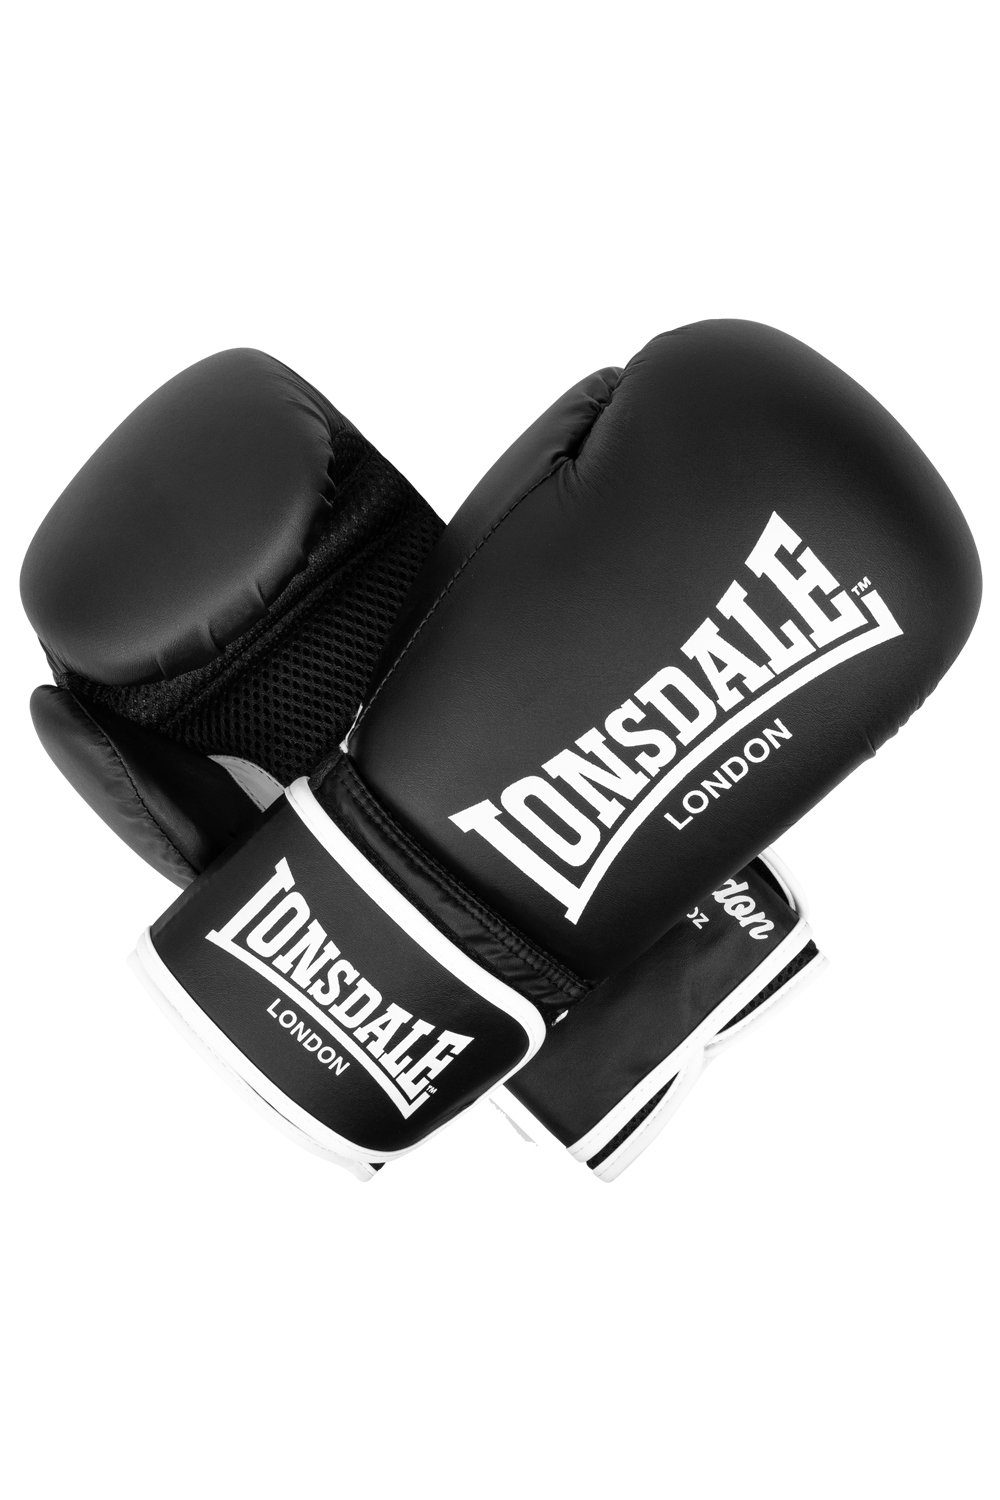 ASHDON Lonsdale Boxhandschuhe Black/White